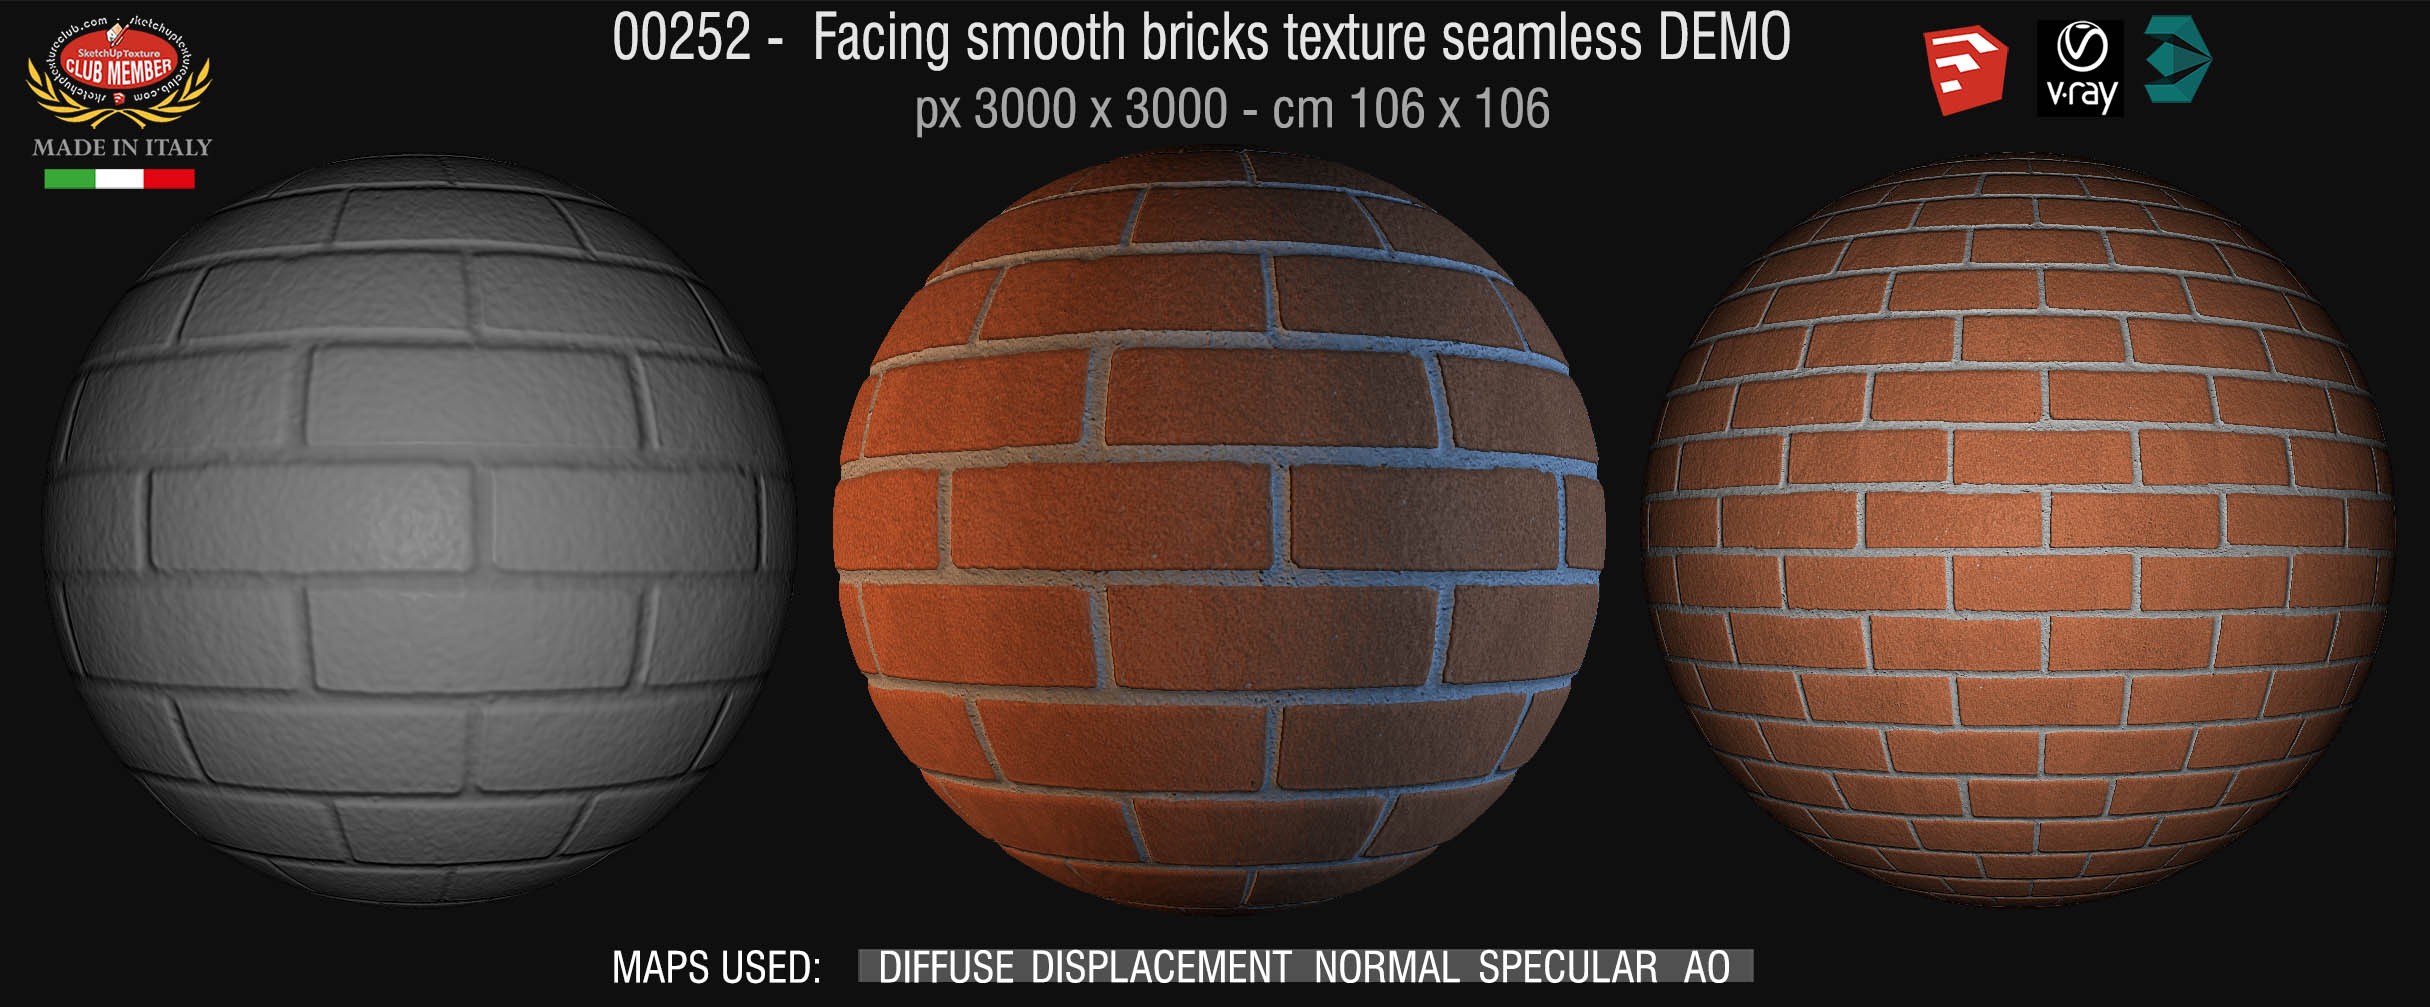 00253 Facing smooth bricks texture seamless + maps DEMO